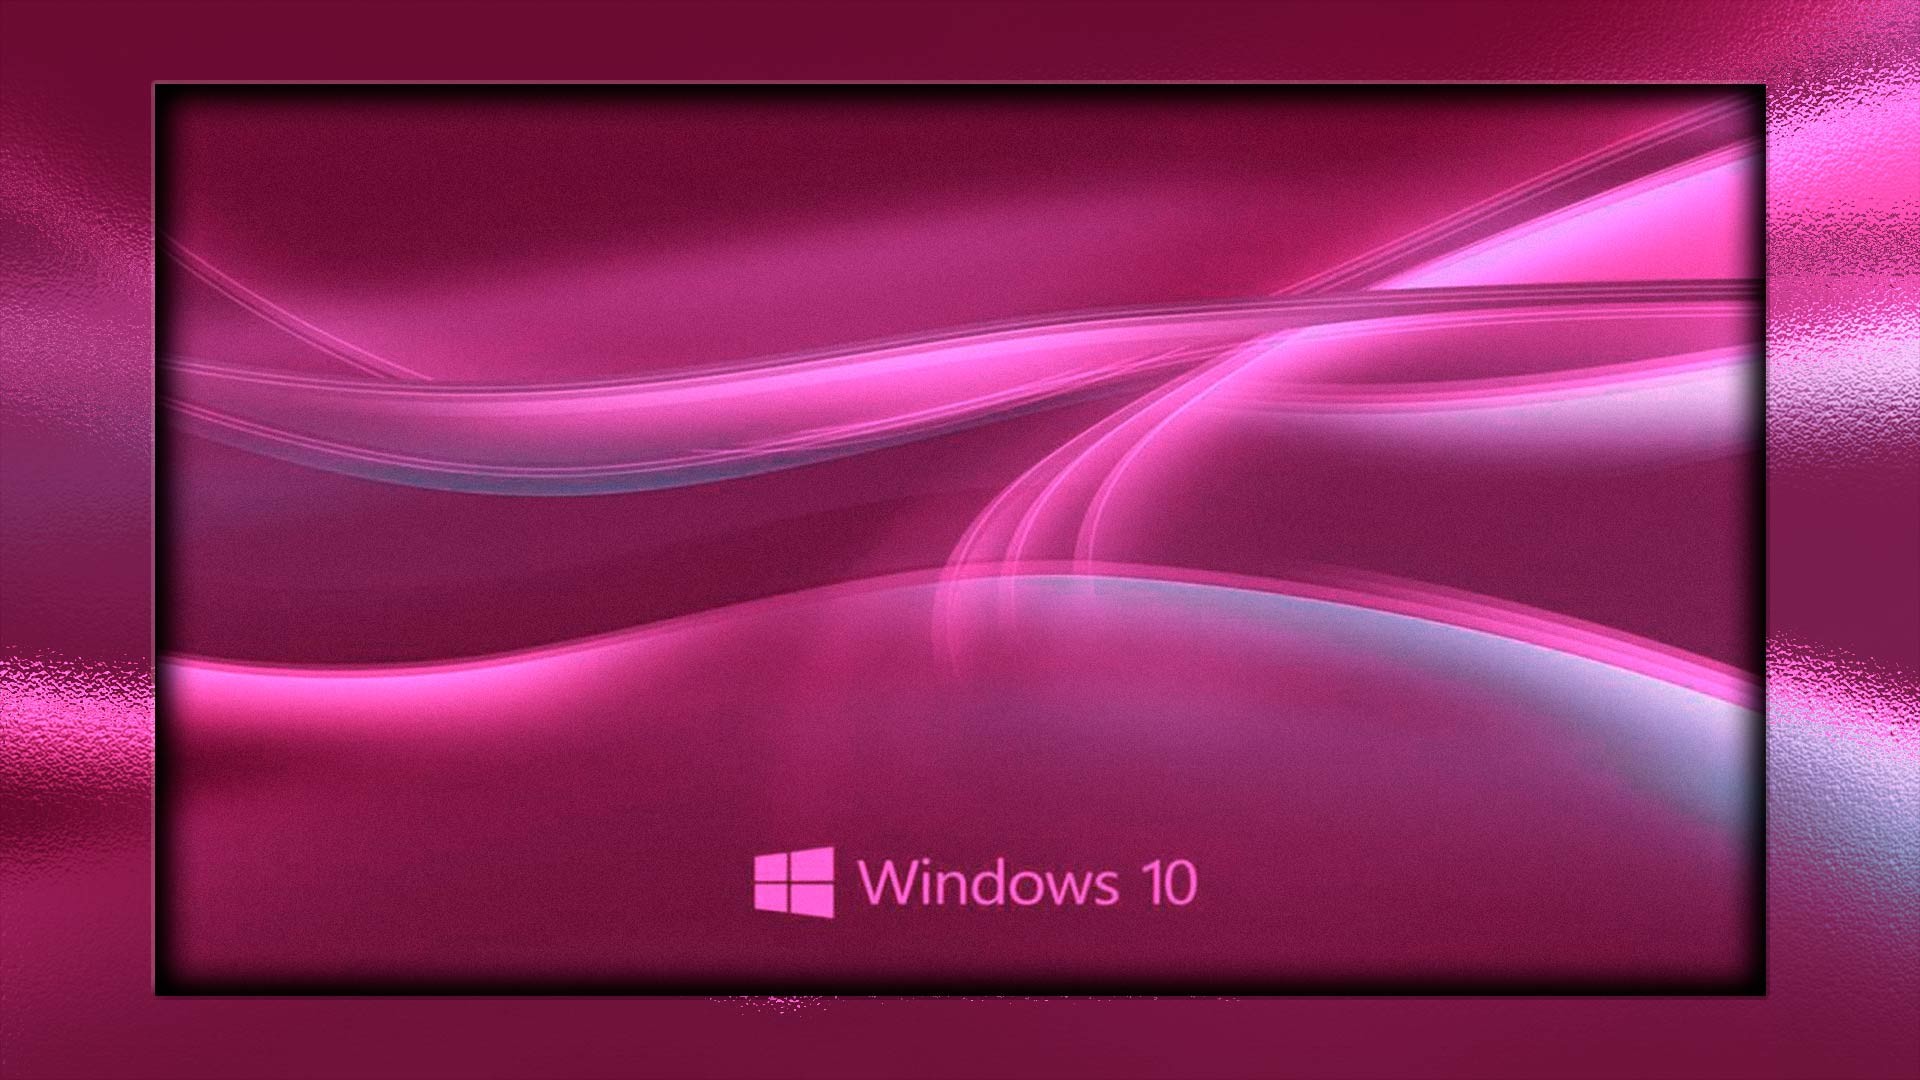 1920x1080 Windows 10 wallpaper,Windows 10 image,Windows 10 hd